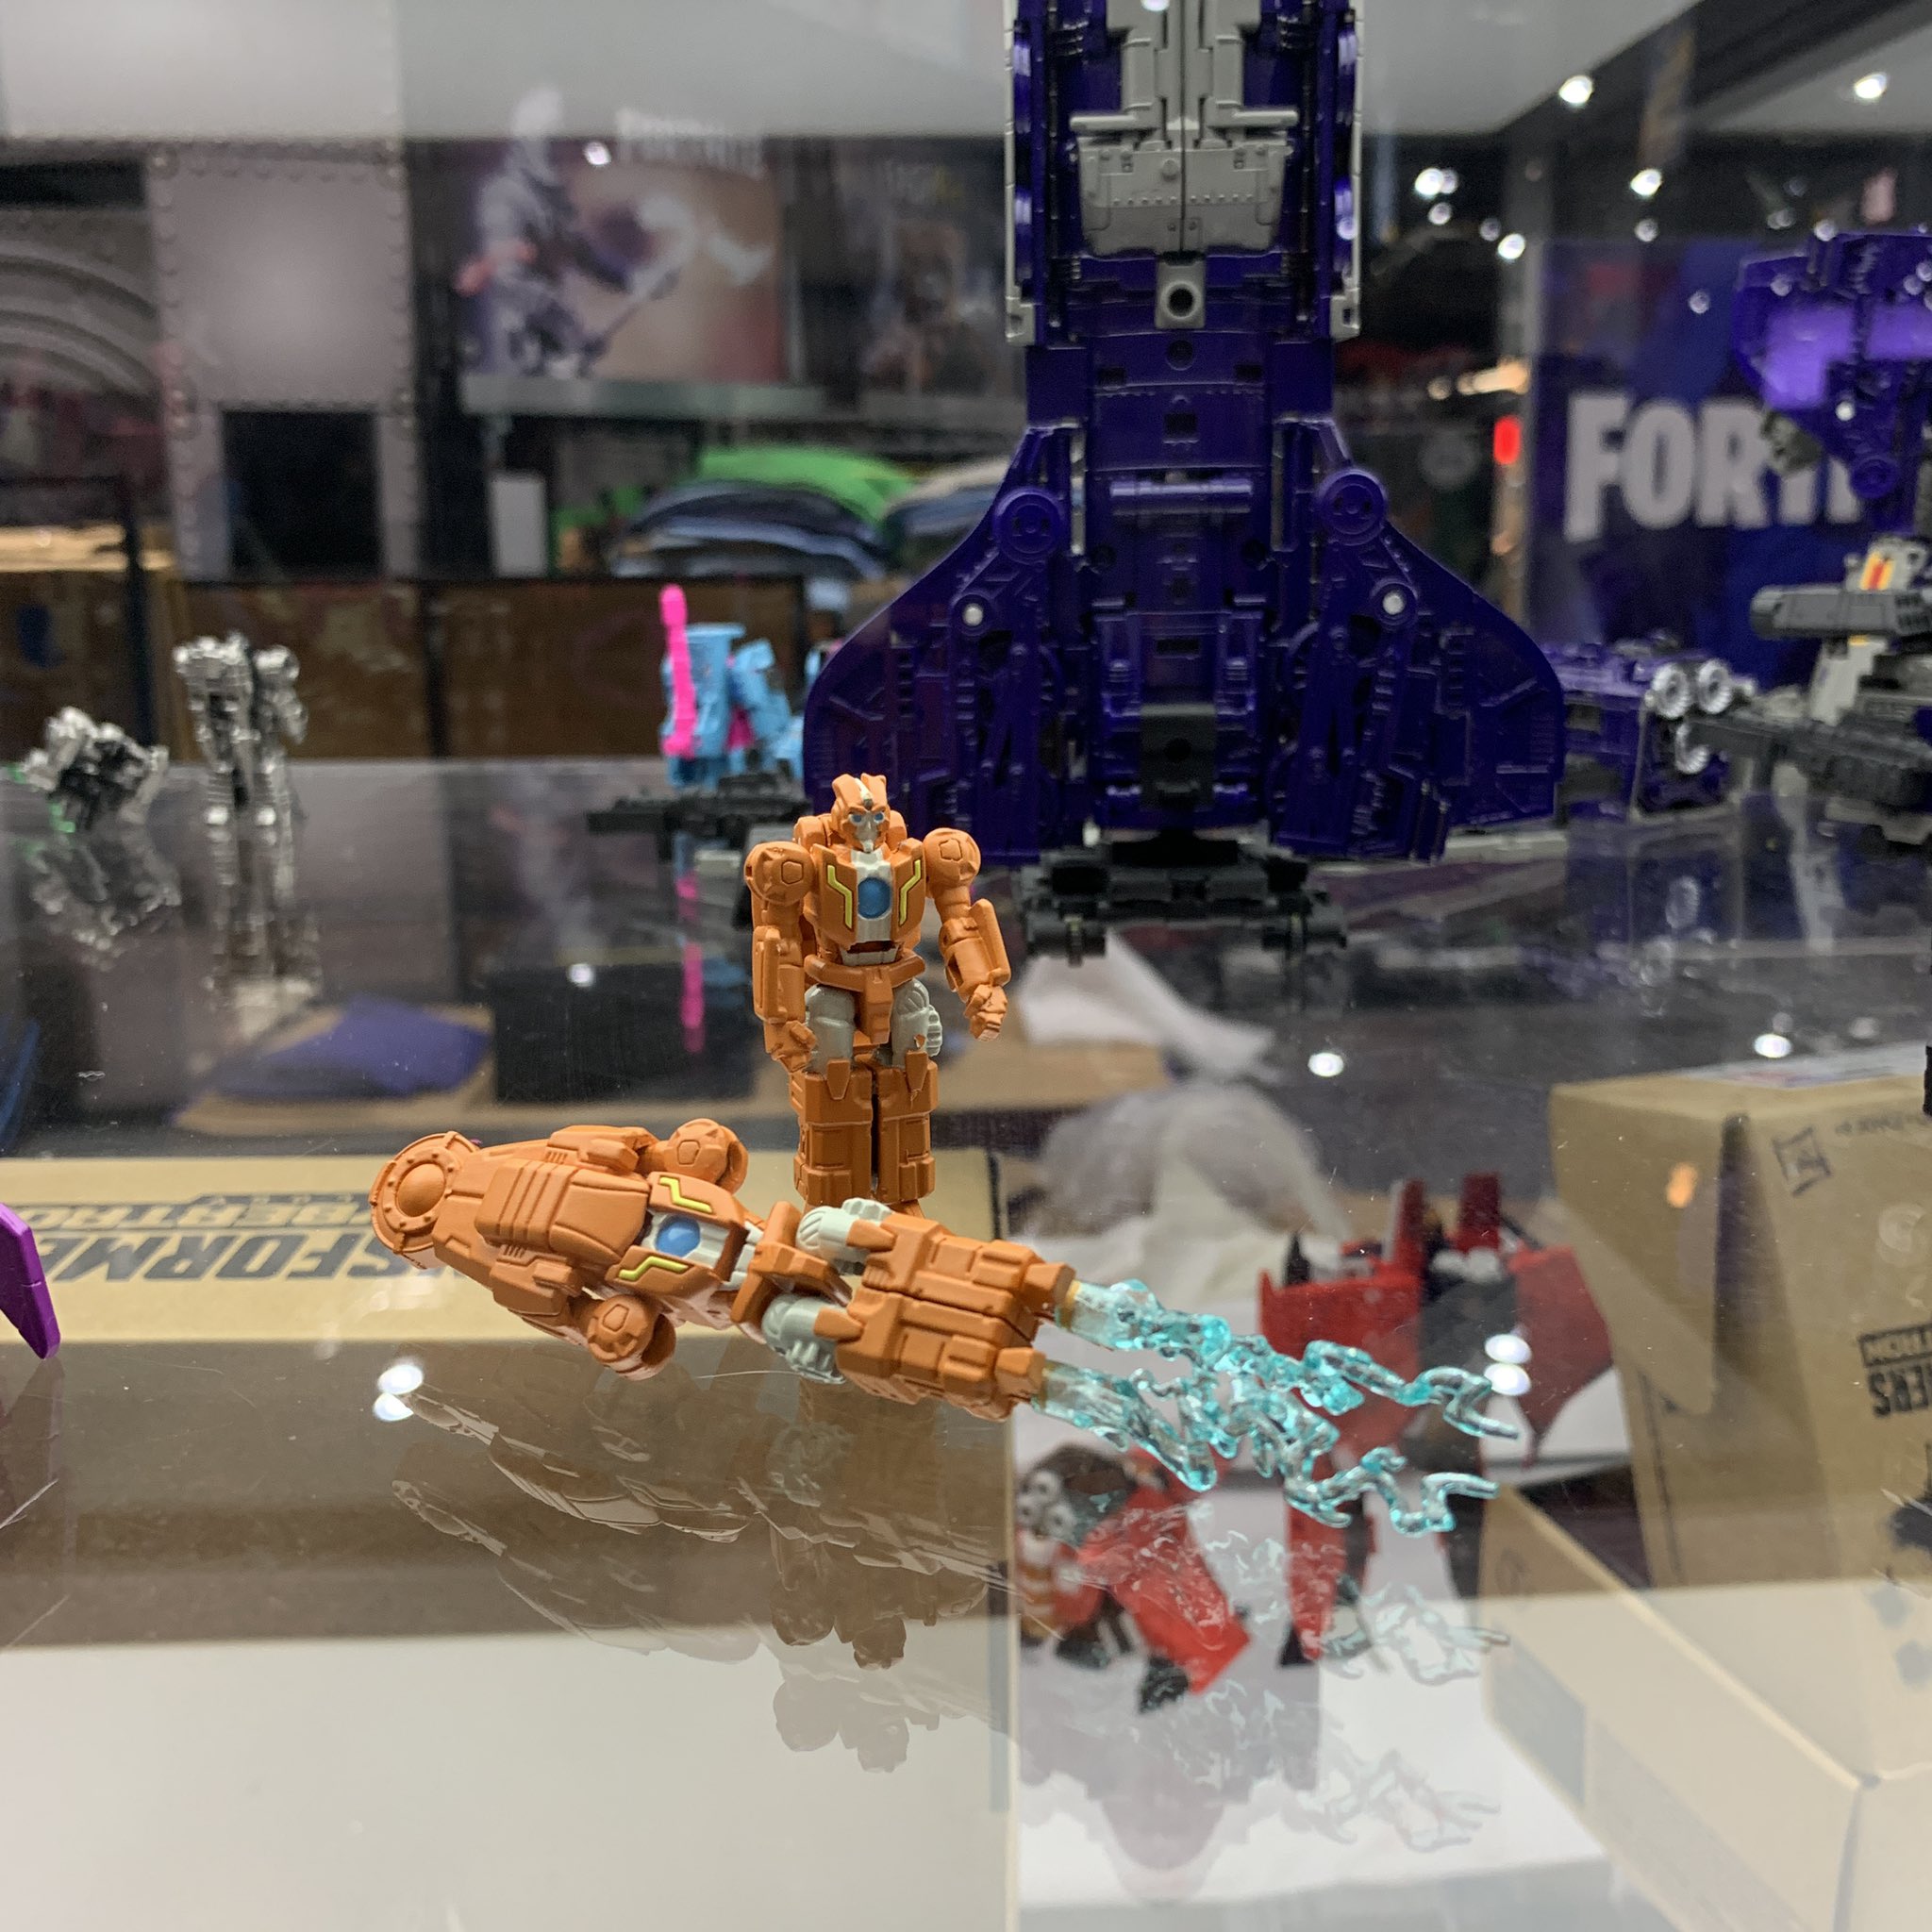 transformers siege combiners